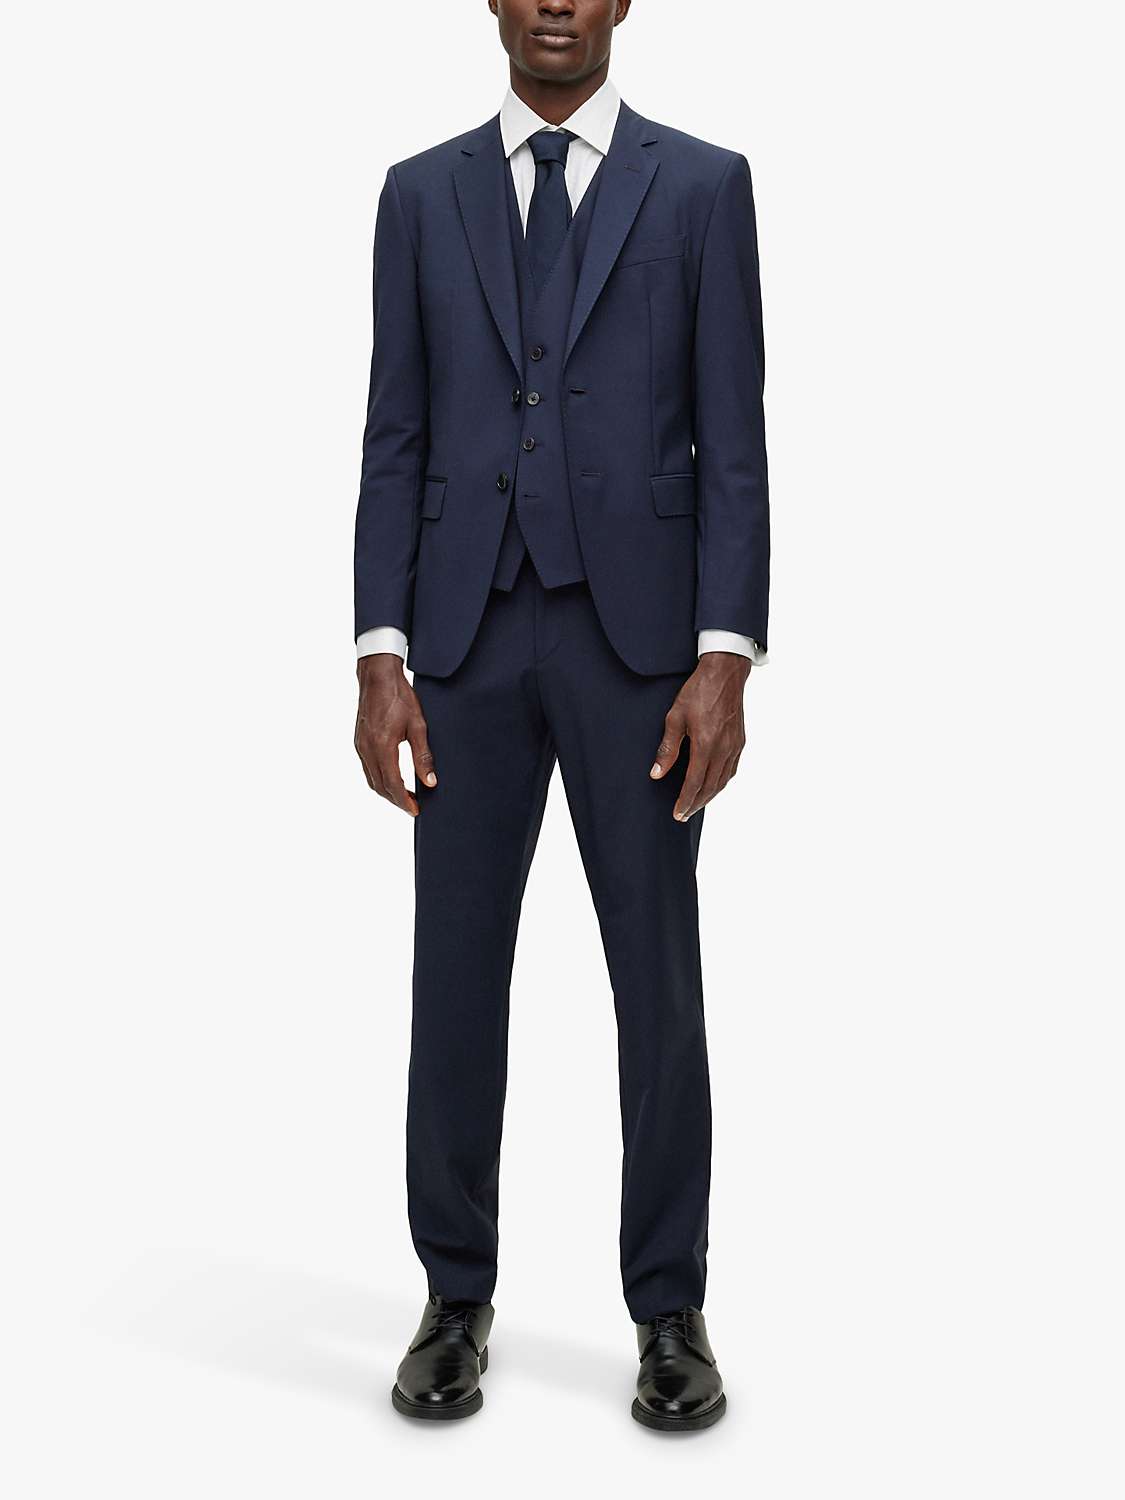 Buy HUGO BOSS Leon Regular Fit Wool Blend Suit Trousers Online at johnlewis.com